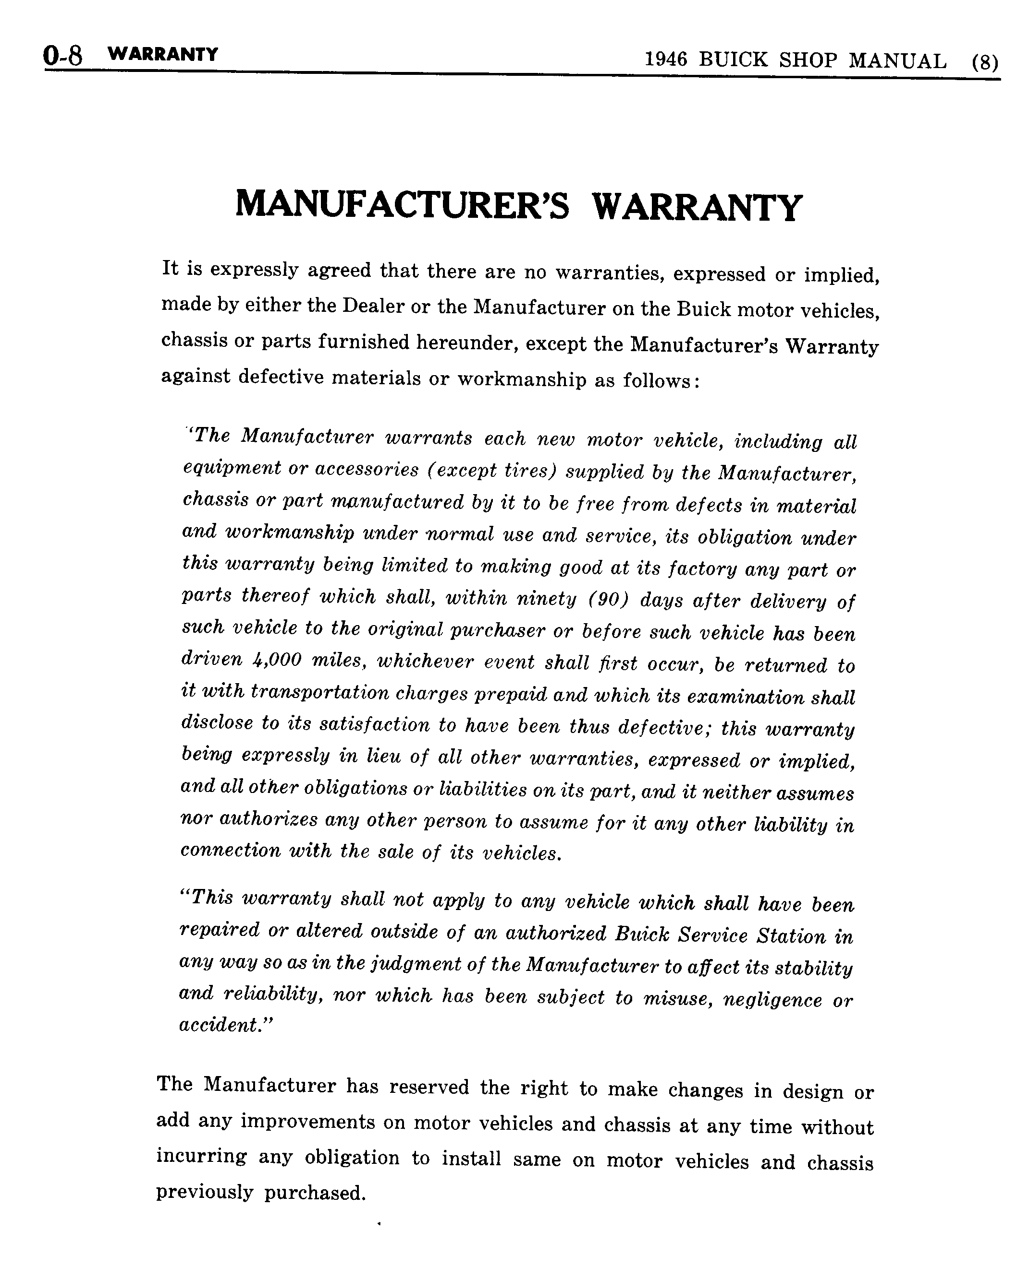 n_01 1946 Buick Shop Manual - Gen Information-009-009.jpg